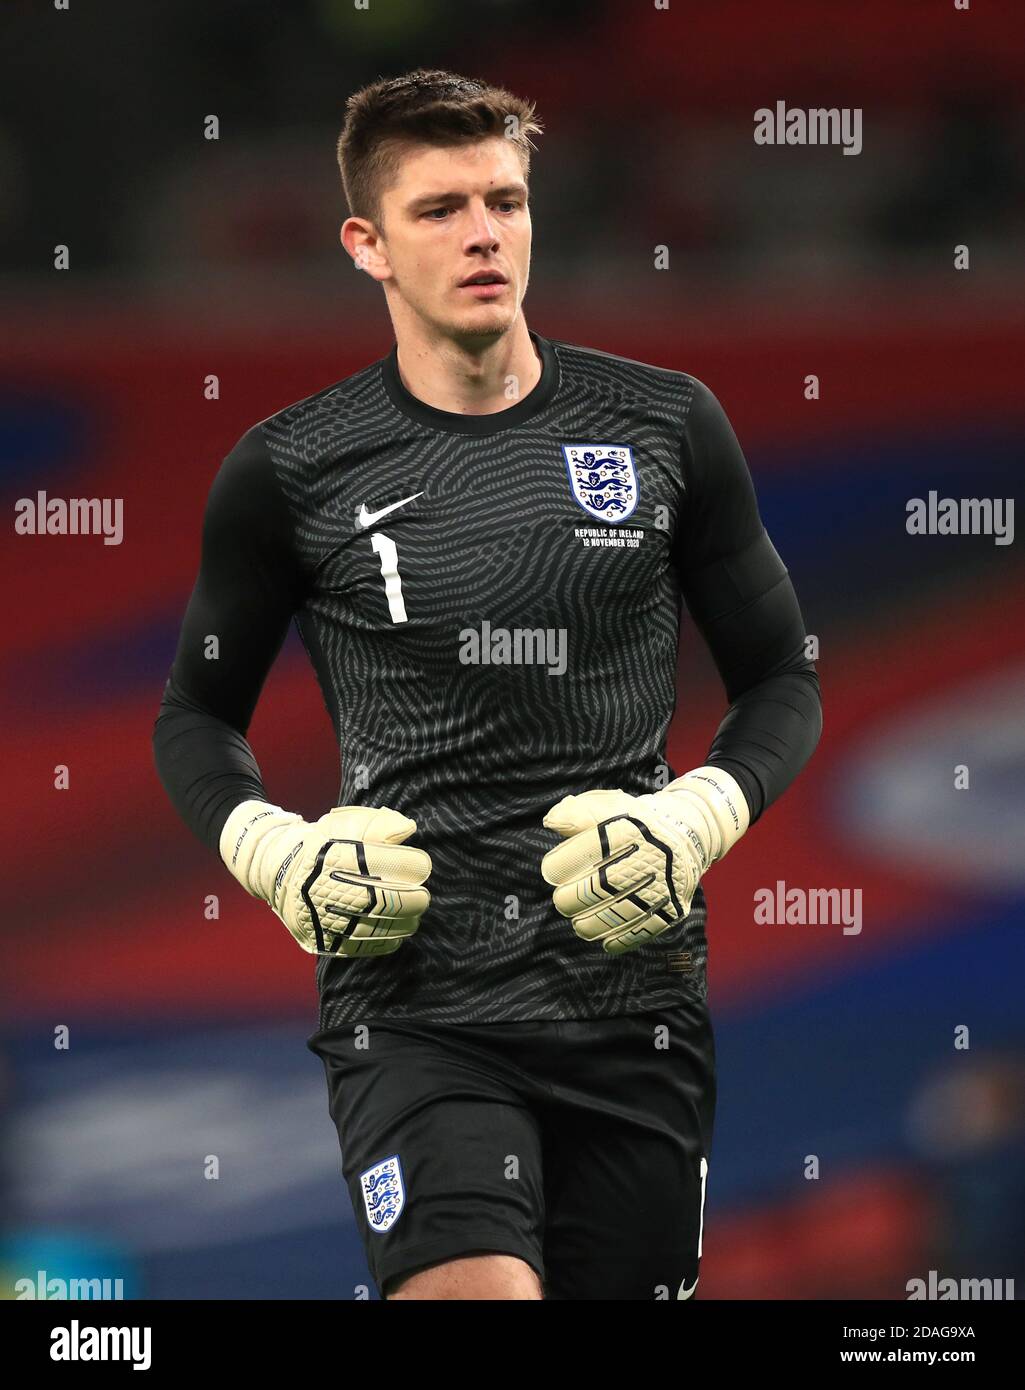 England goalkeeper Nick Pope during the international friendly at Wembley  Stadium, London Stock Photo - Alamy